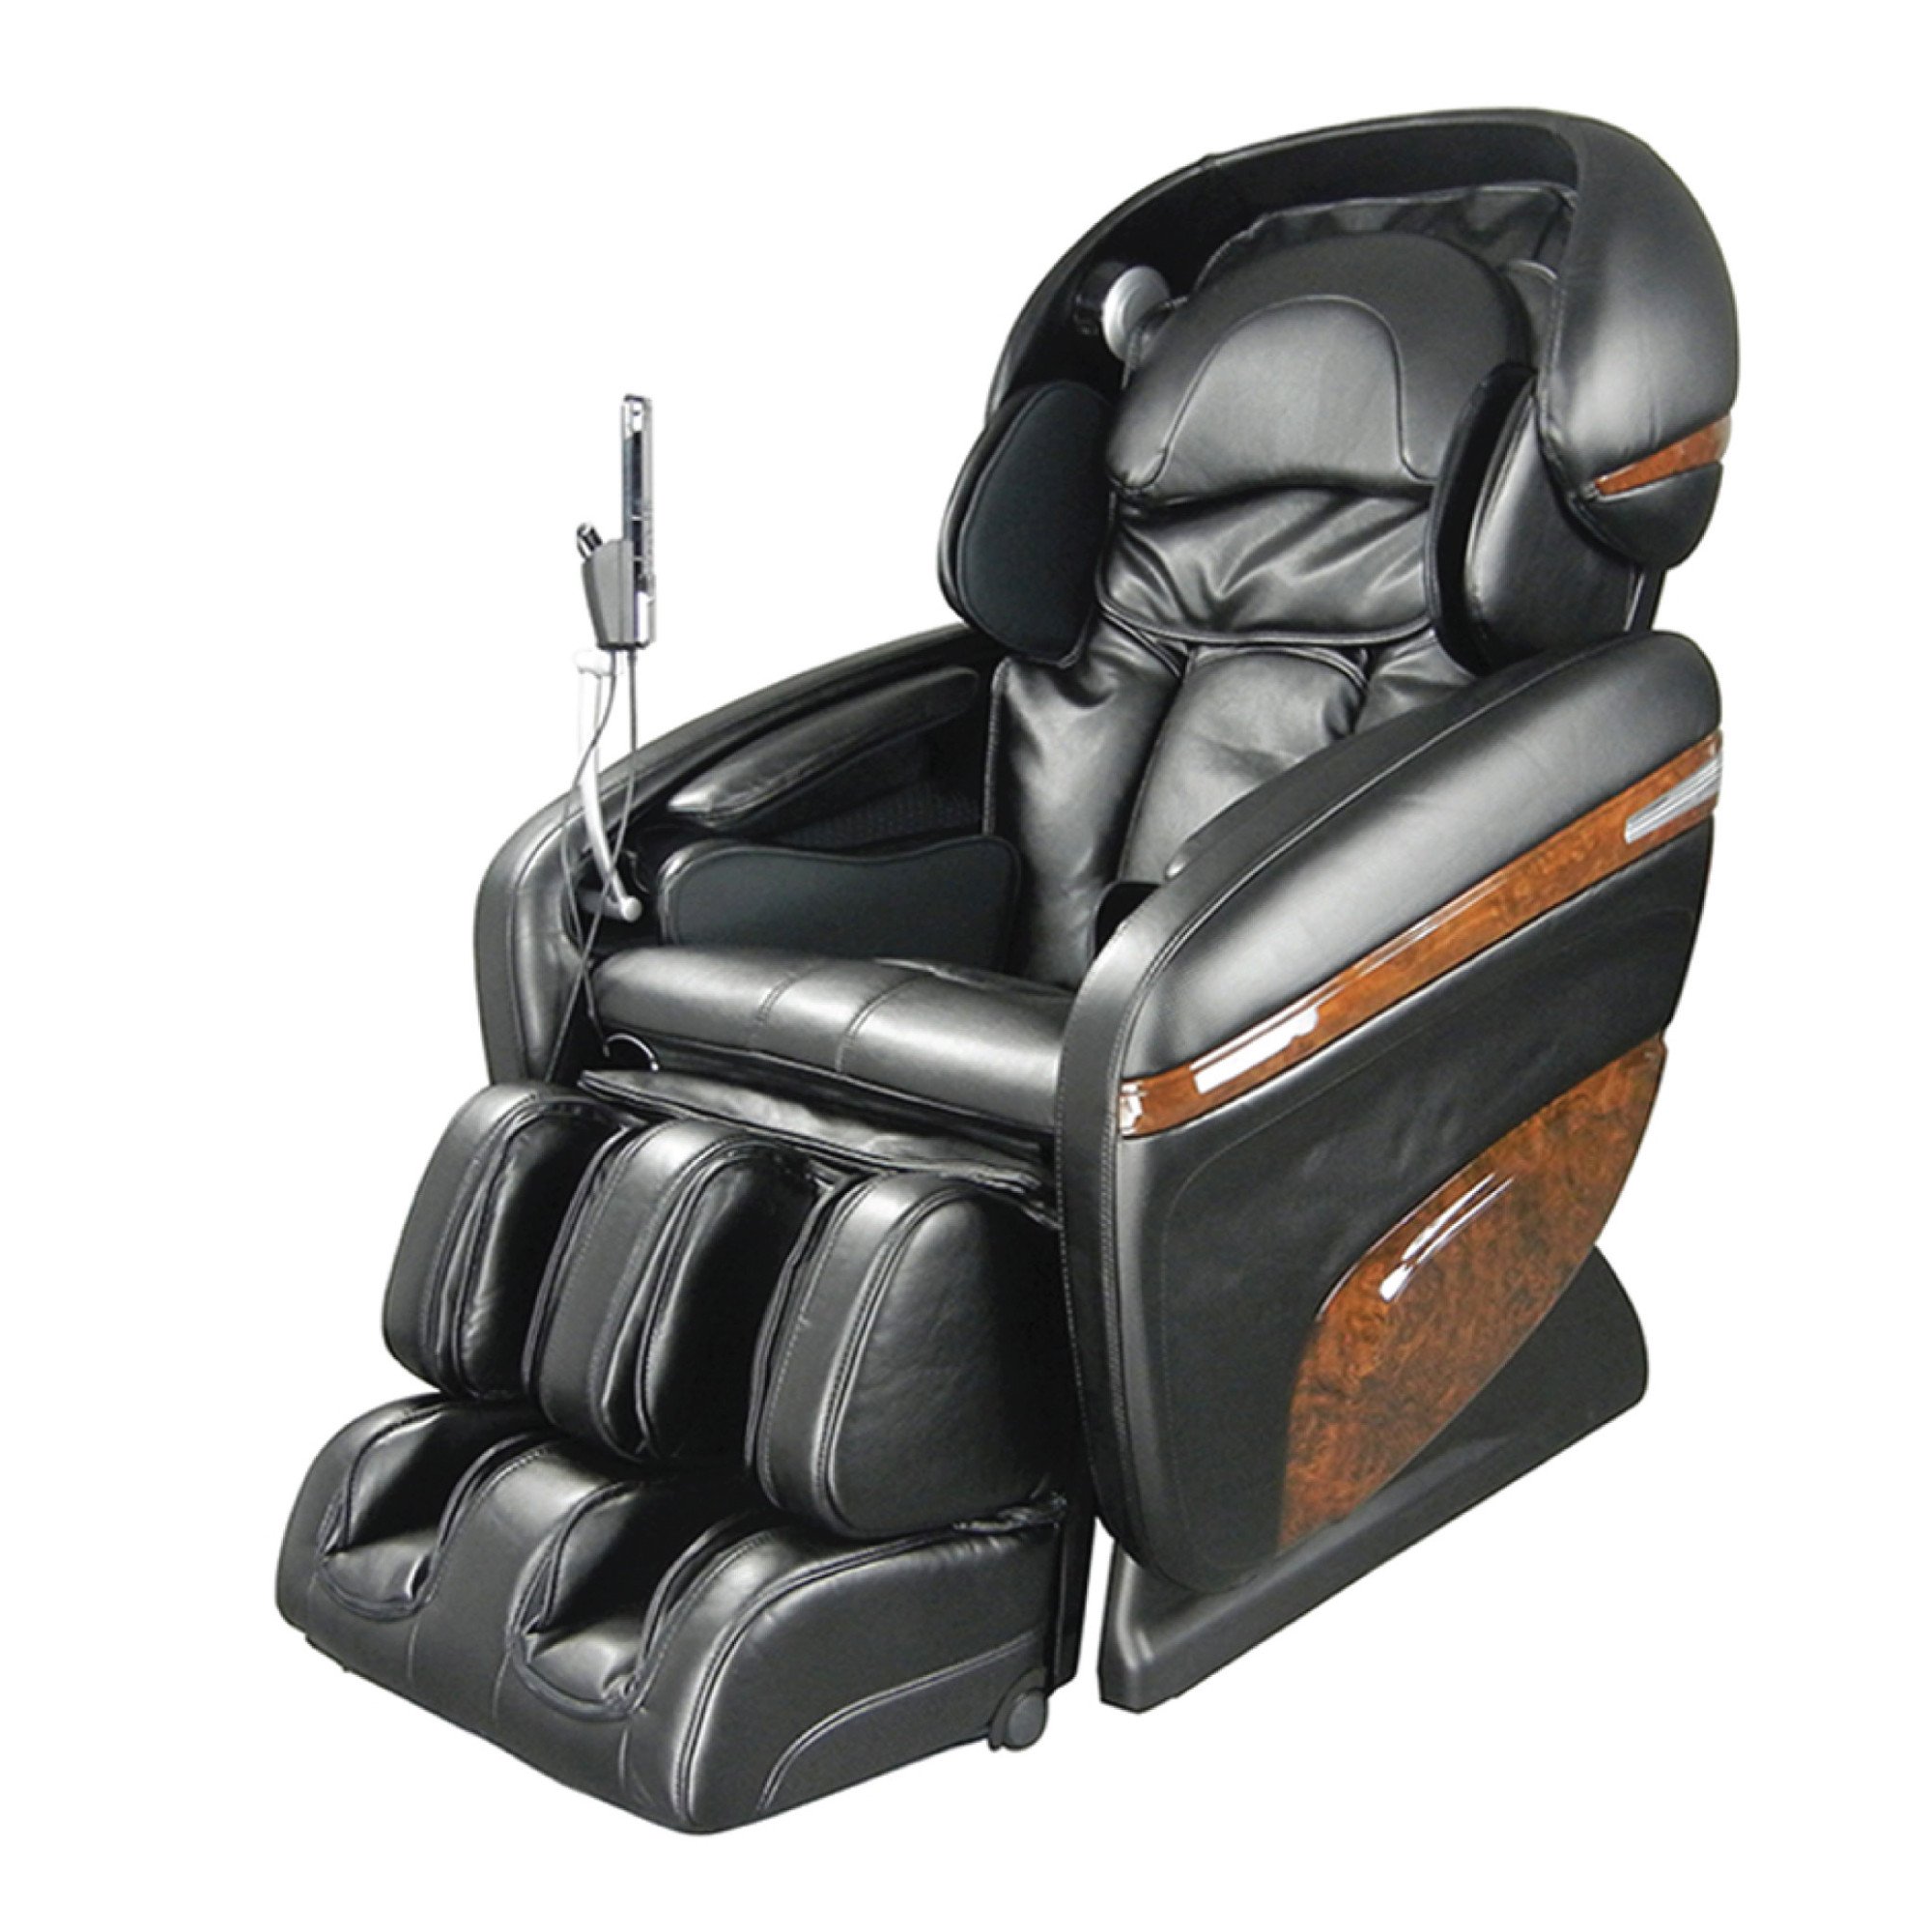 Osaki 3D Pro Dreamer Massage Chair - Black - Front Angle View